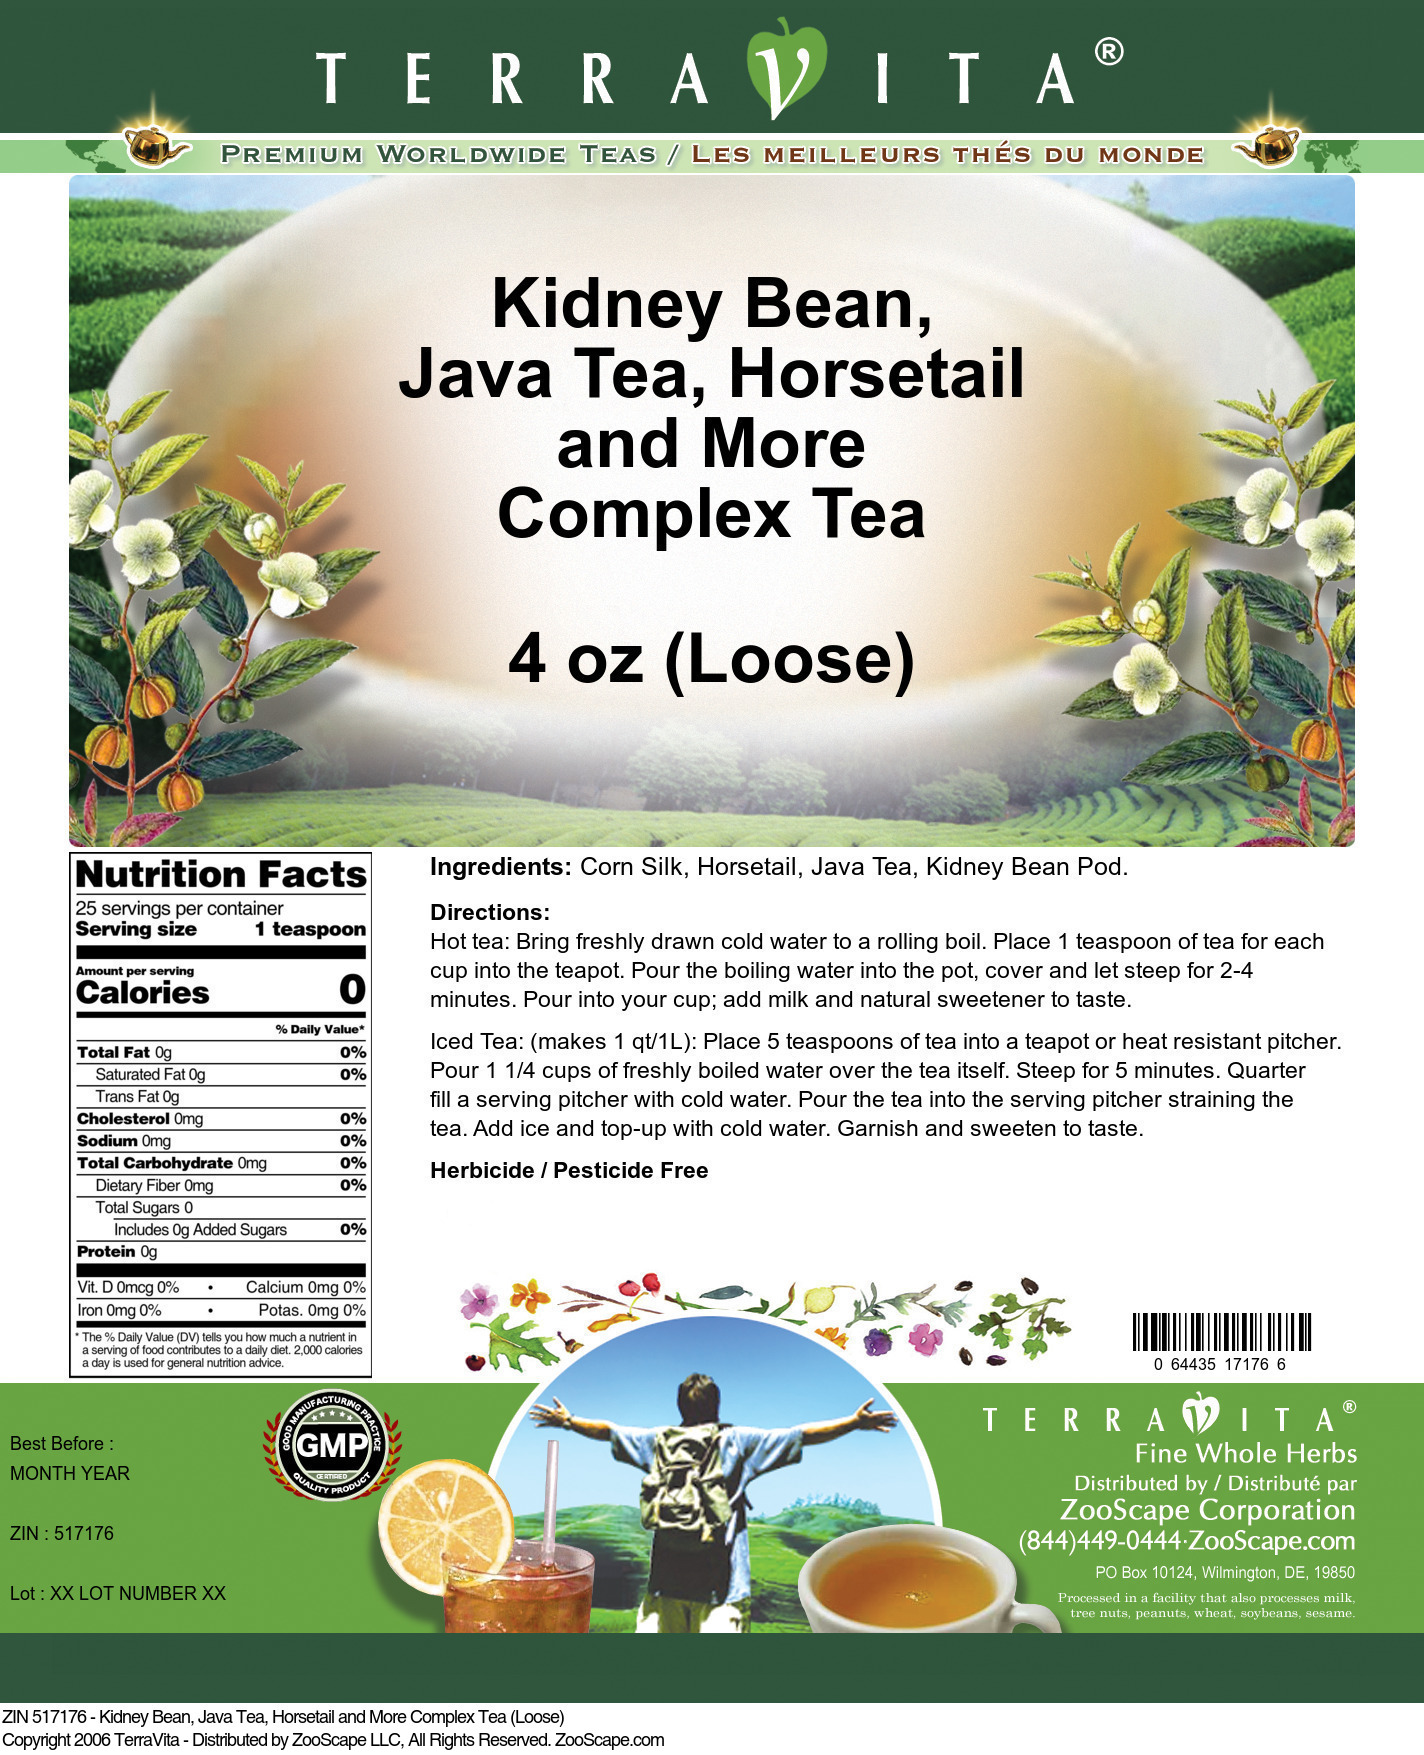 Kidney Bean, Java Tea, Horsetail and More Complex Tea (Loose) - Label